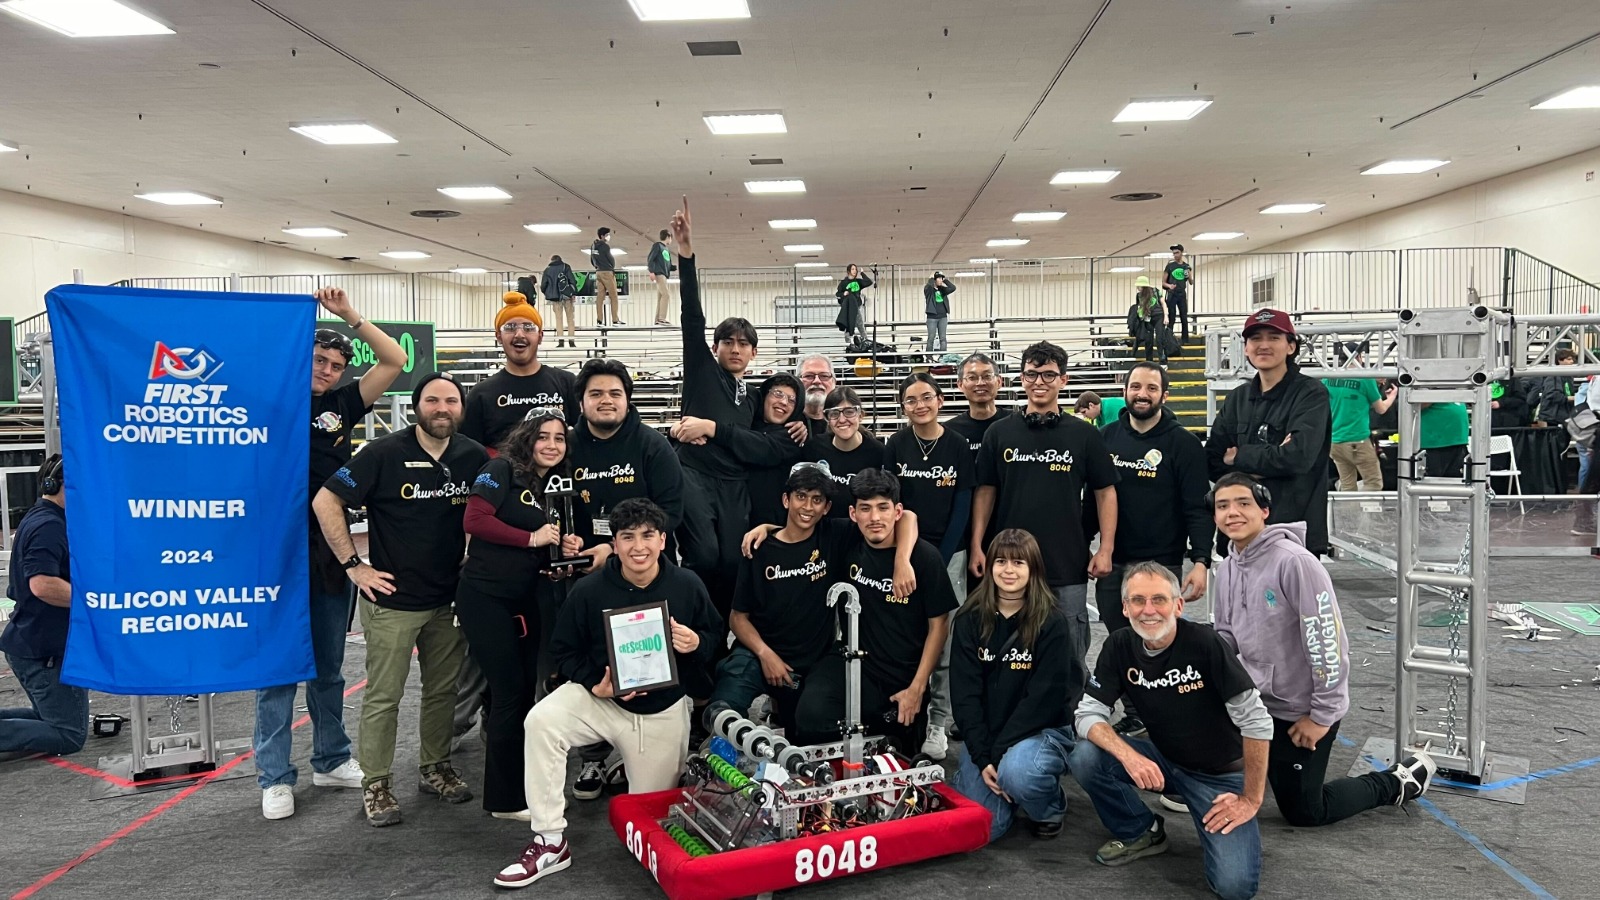 "Churrobots", East Palo Alto robotics team seeks to go to world championship in Houston